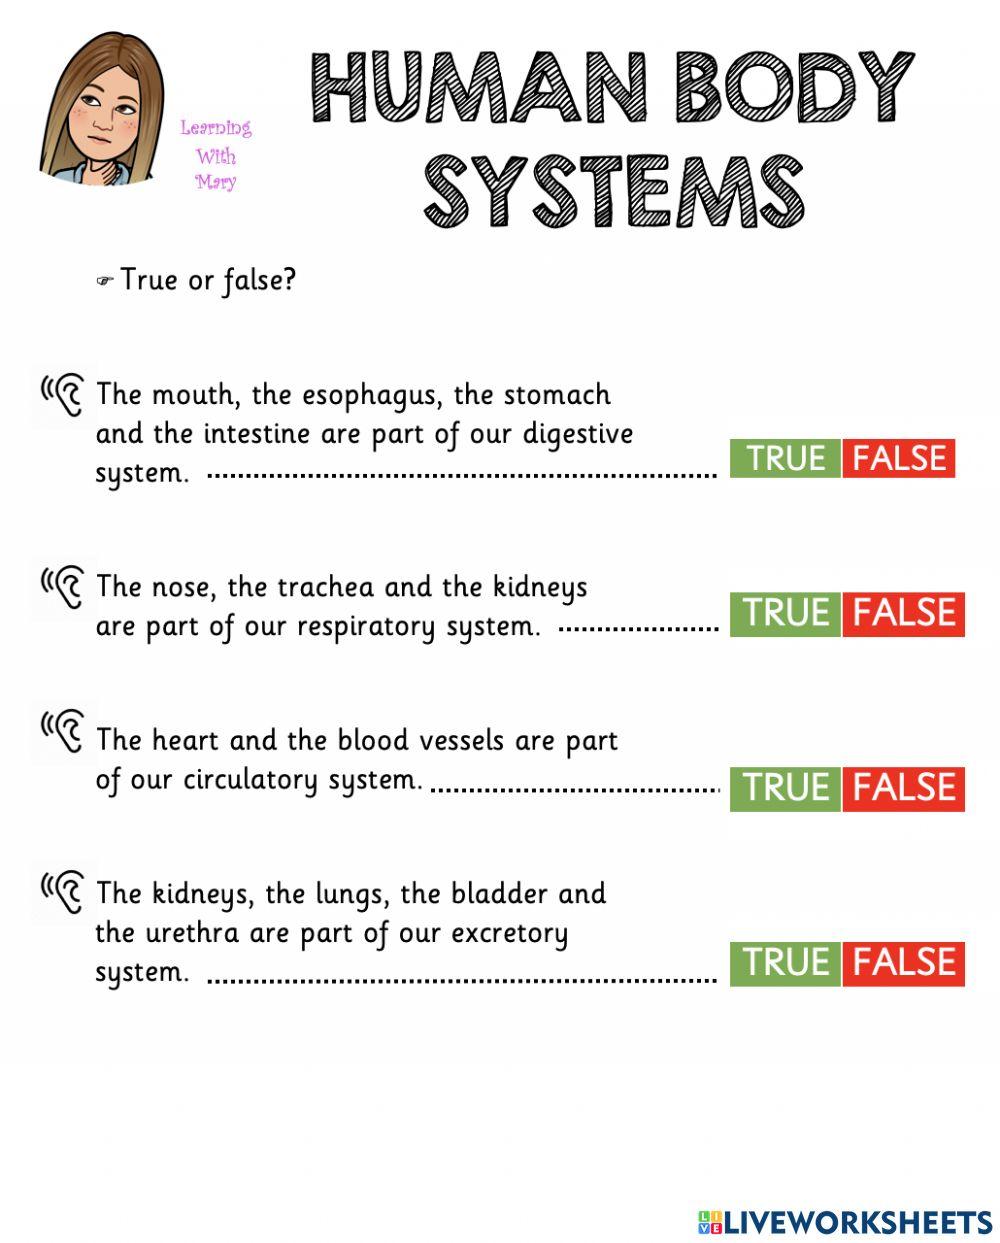 Reading human body systems true or false